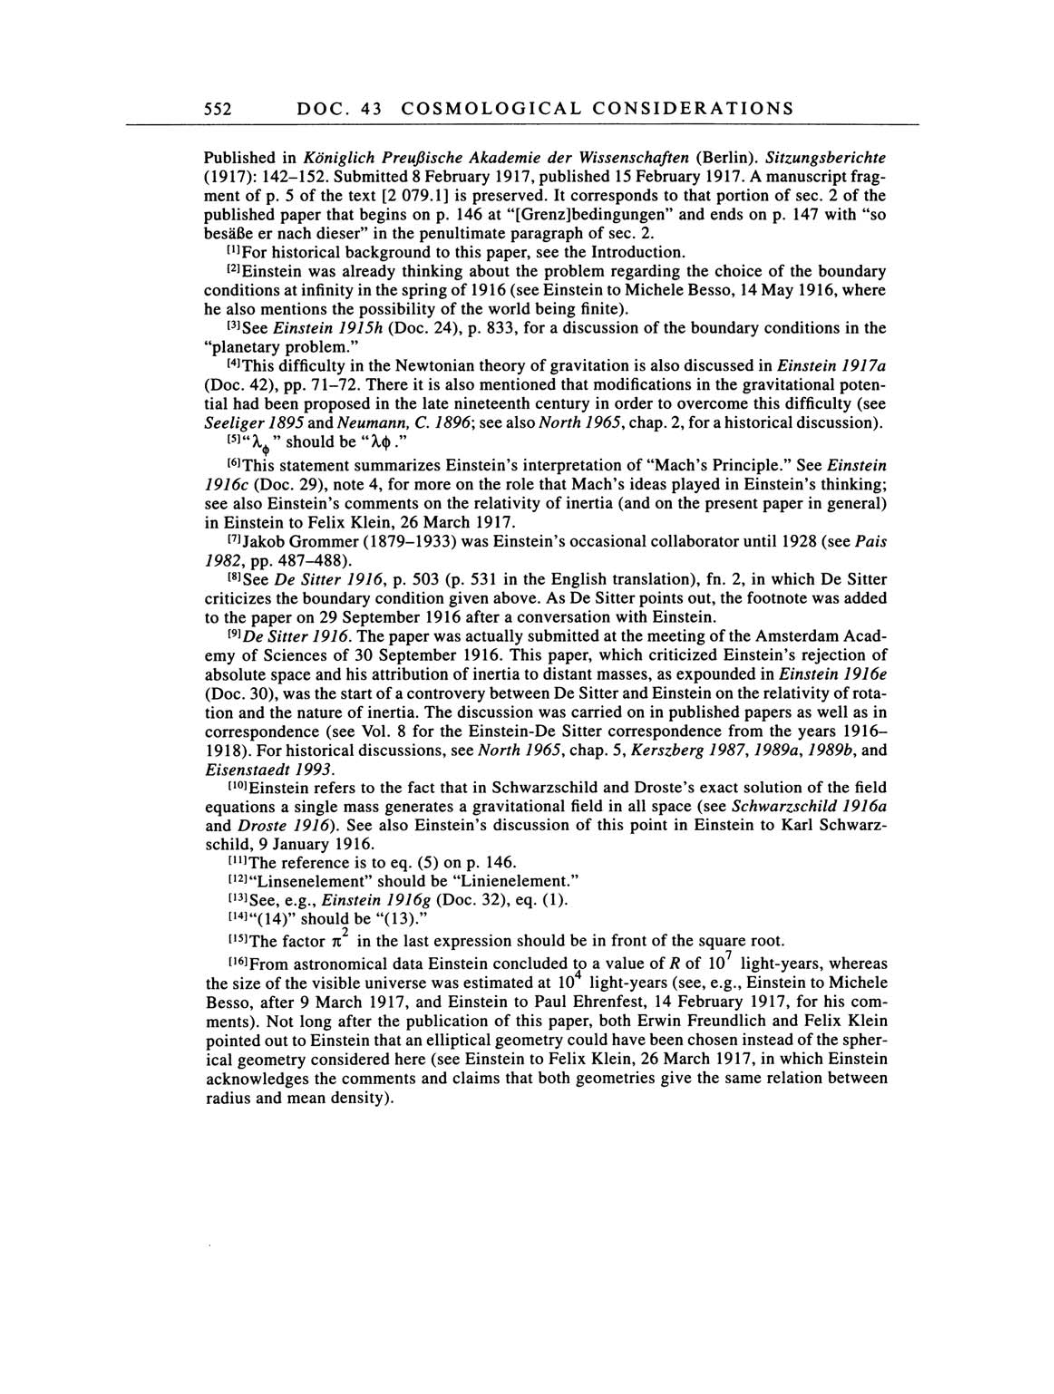 Volume 6: The Berlin Years: Writings, 1914-1917 page 552